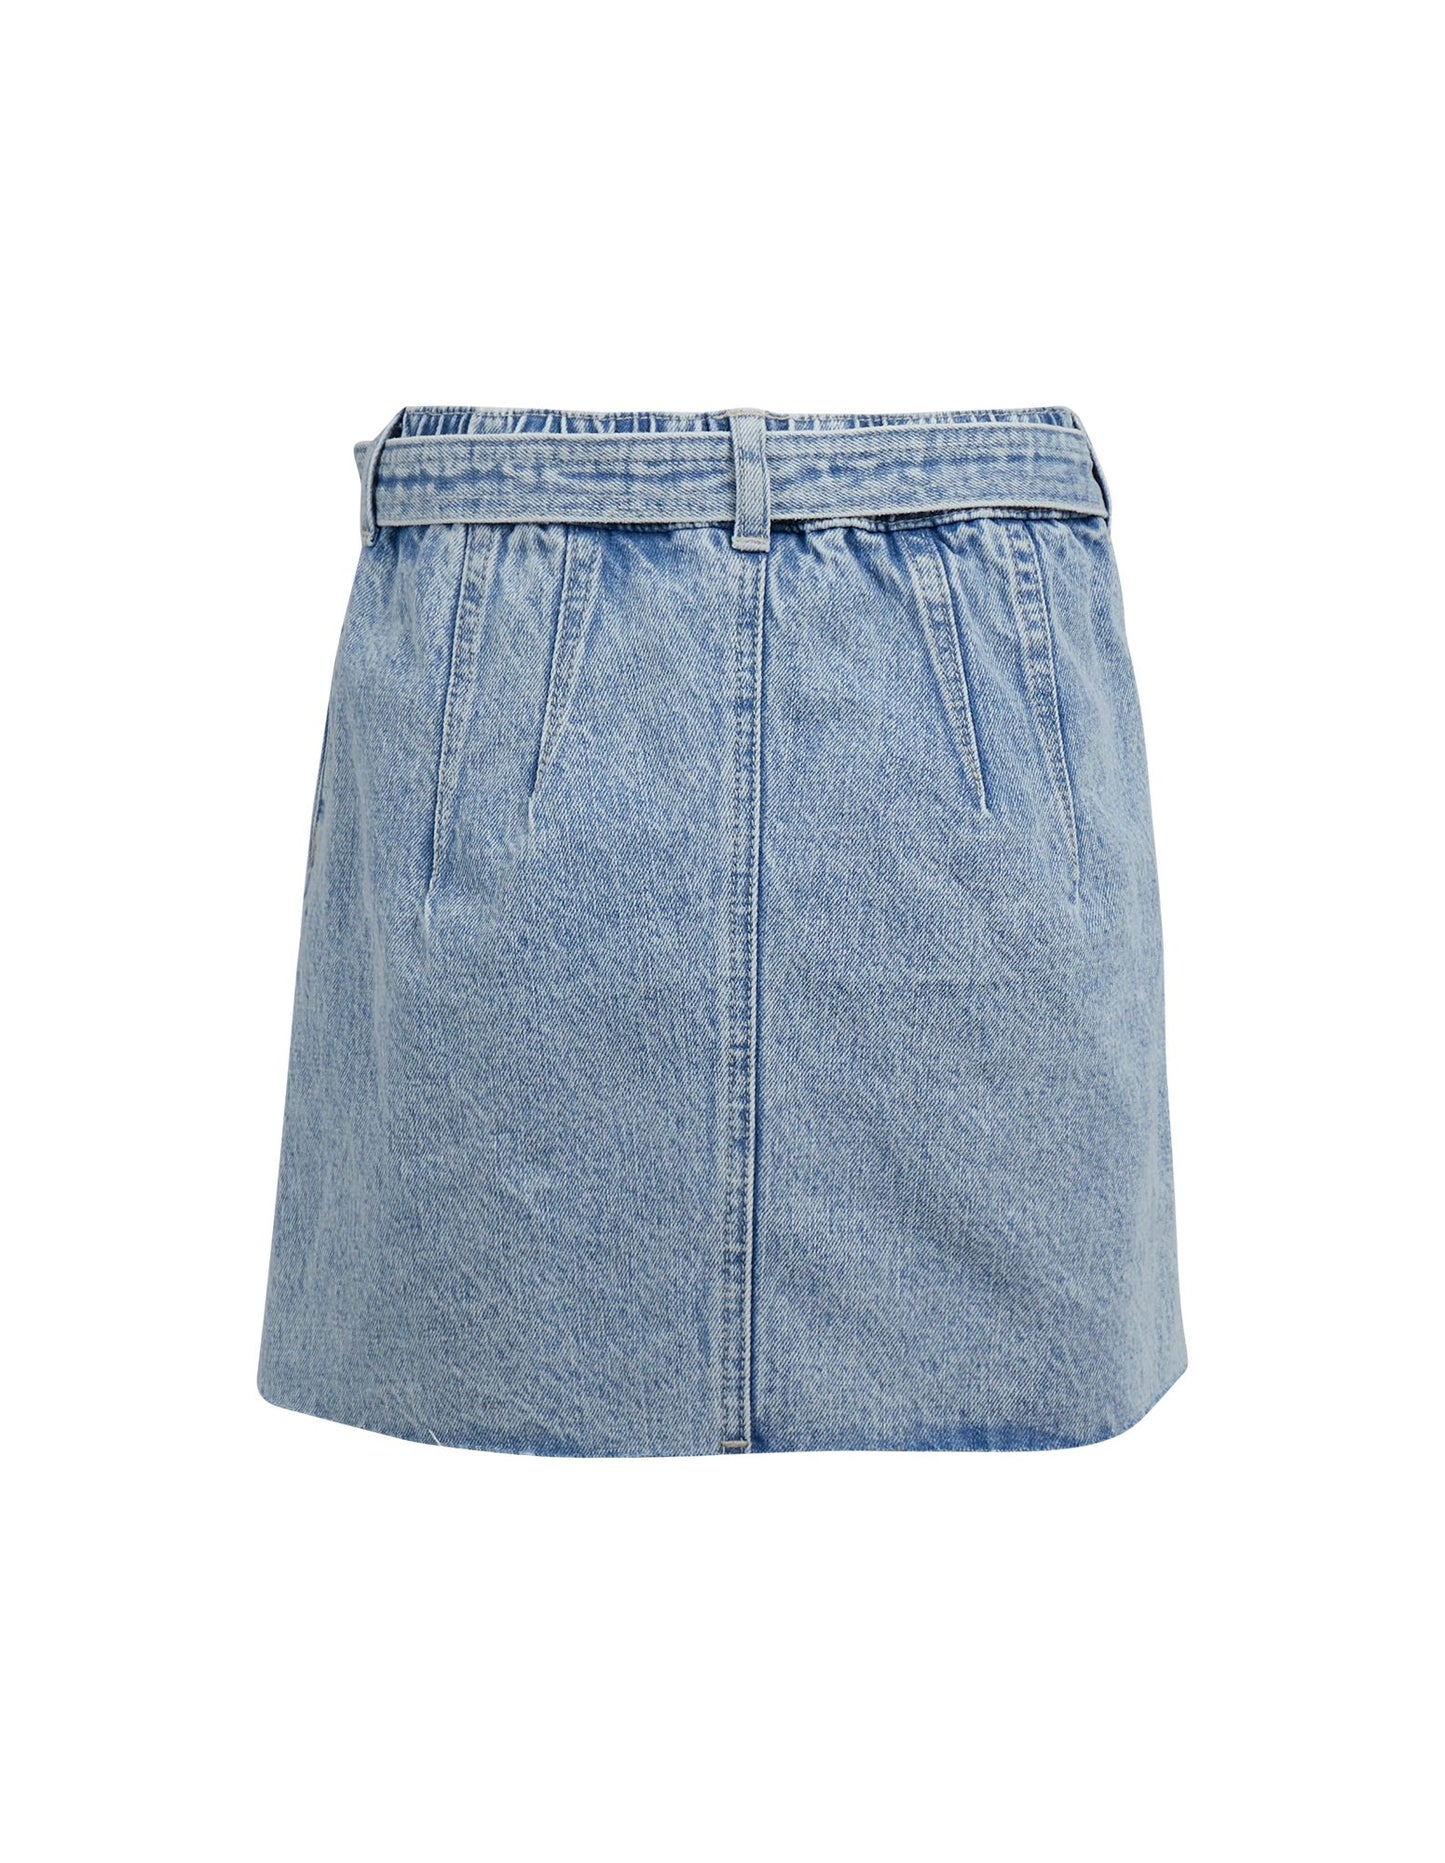 Callie Denim Skirt - Lucky Last! (Size 10)